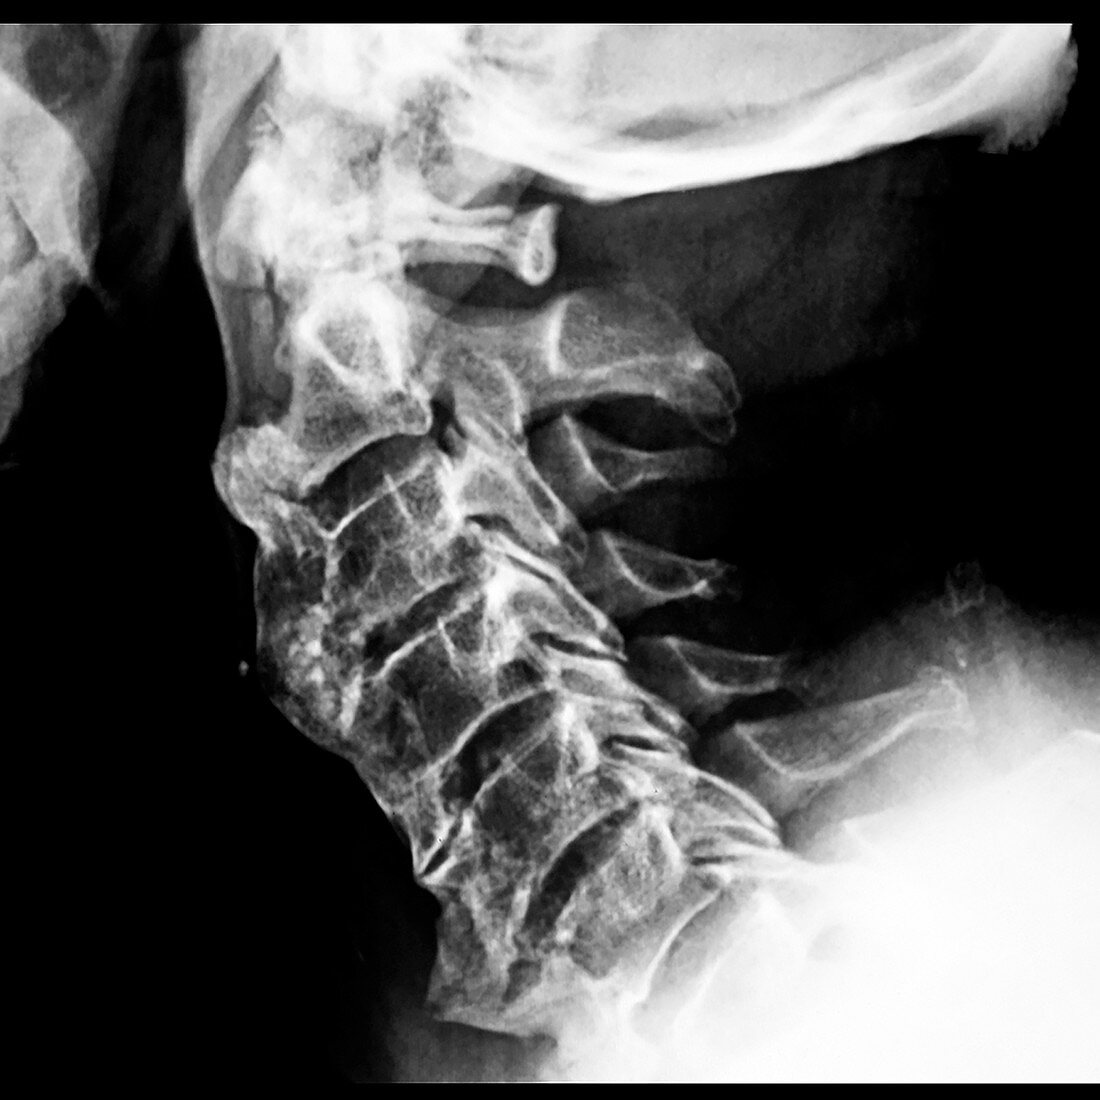 X-rays of DISH